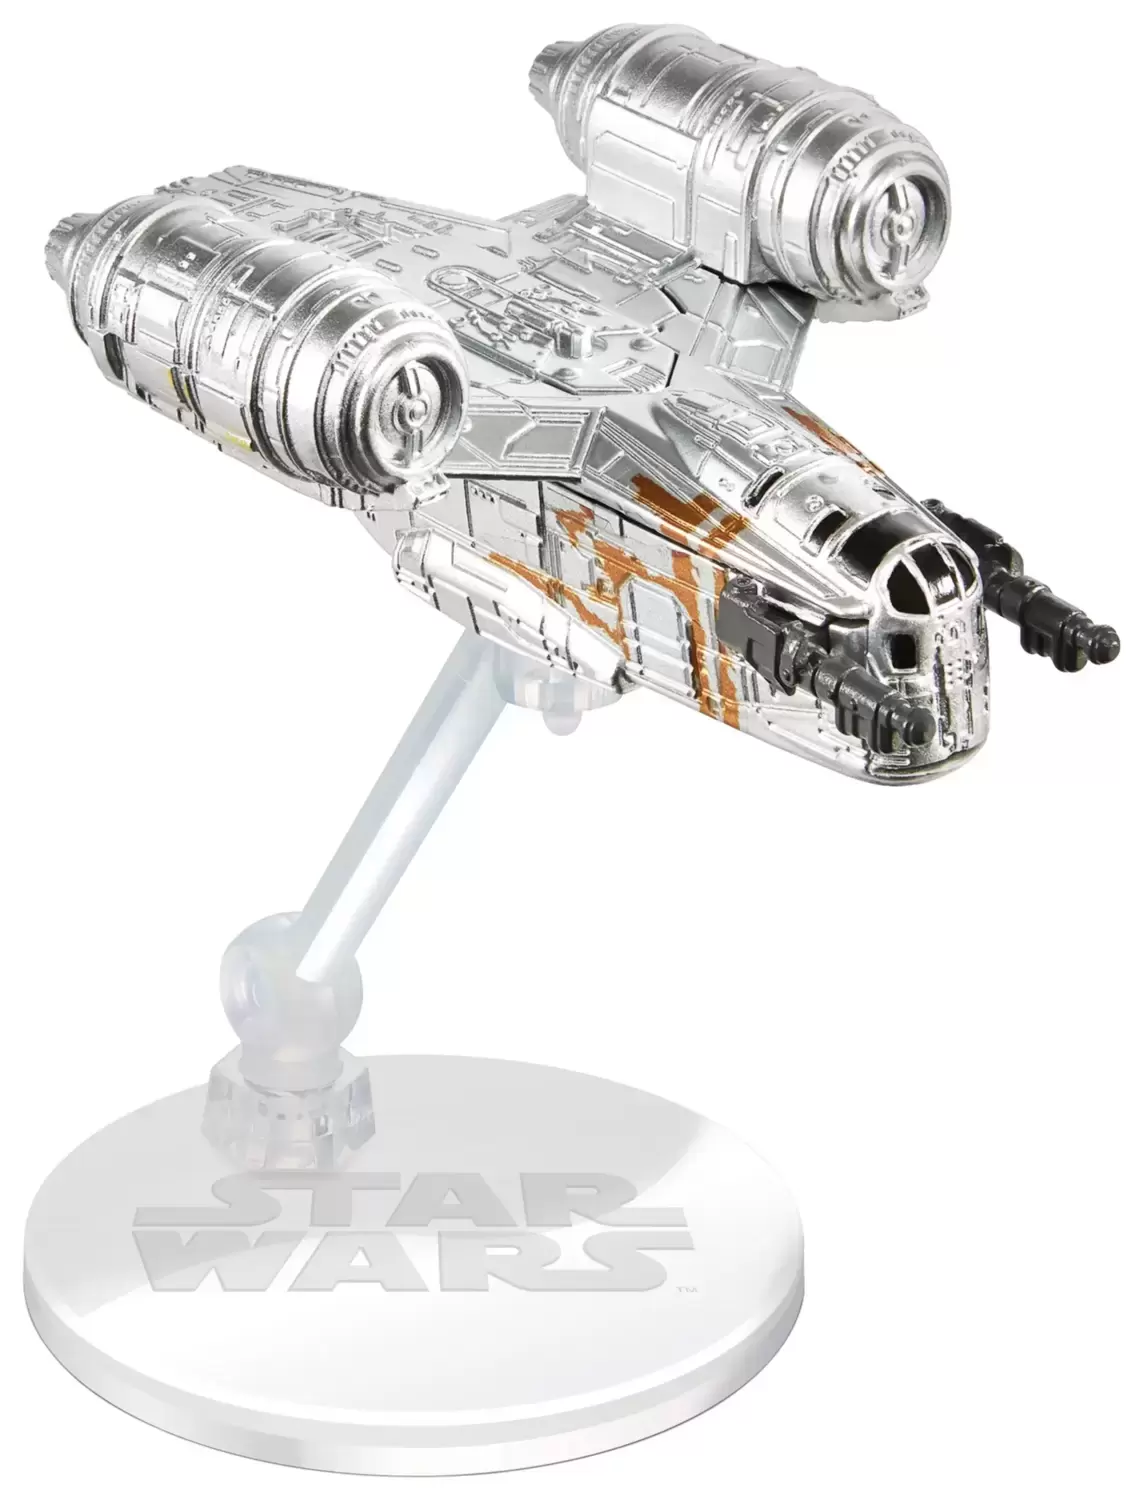 Hot Wheels Star Wars Republic Attack Gunship Starship Vehicle Toy CGW58 